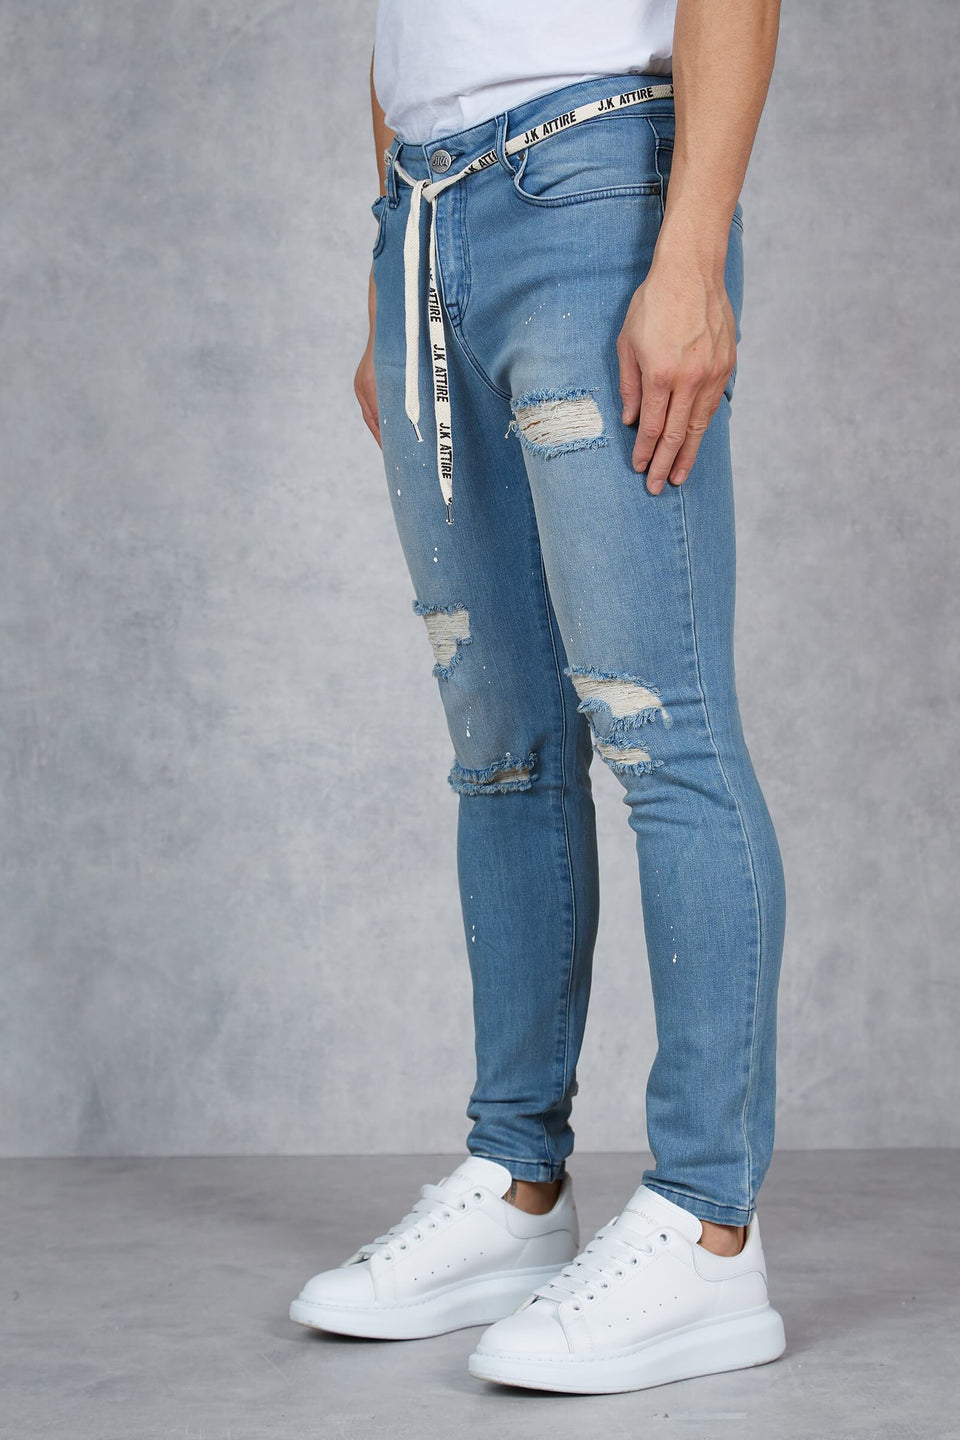 F2 - Richmond Distressed Paint Splatter Skinny Jeans - Light Blue